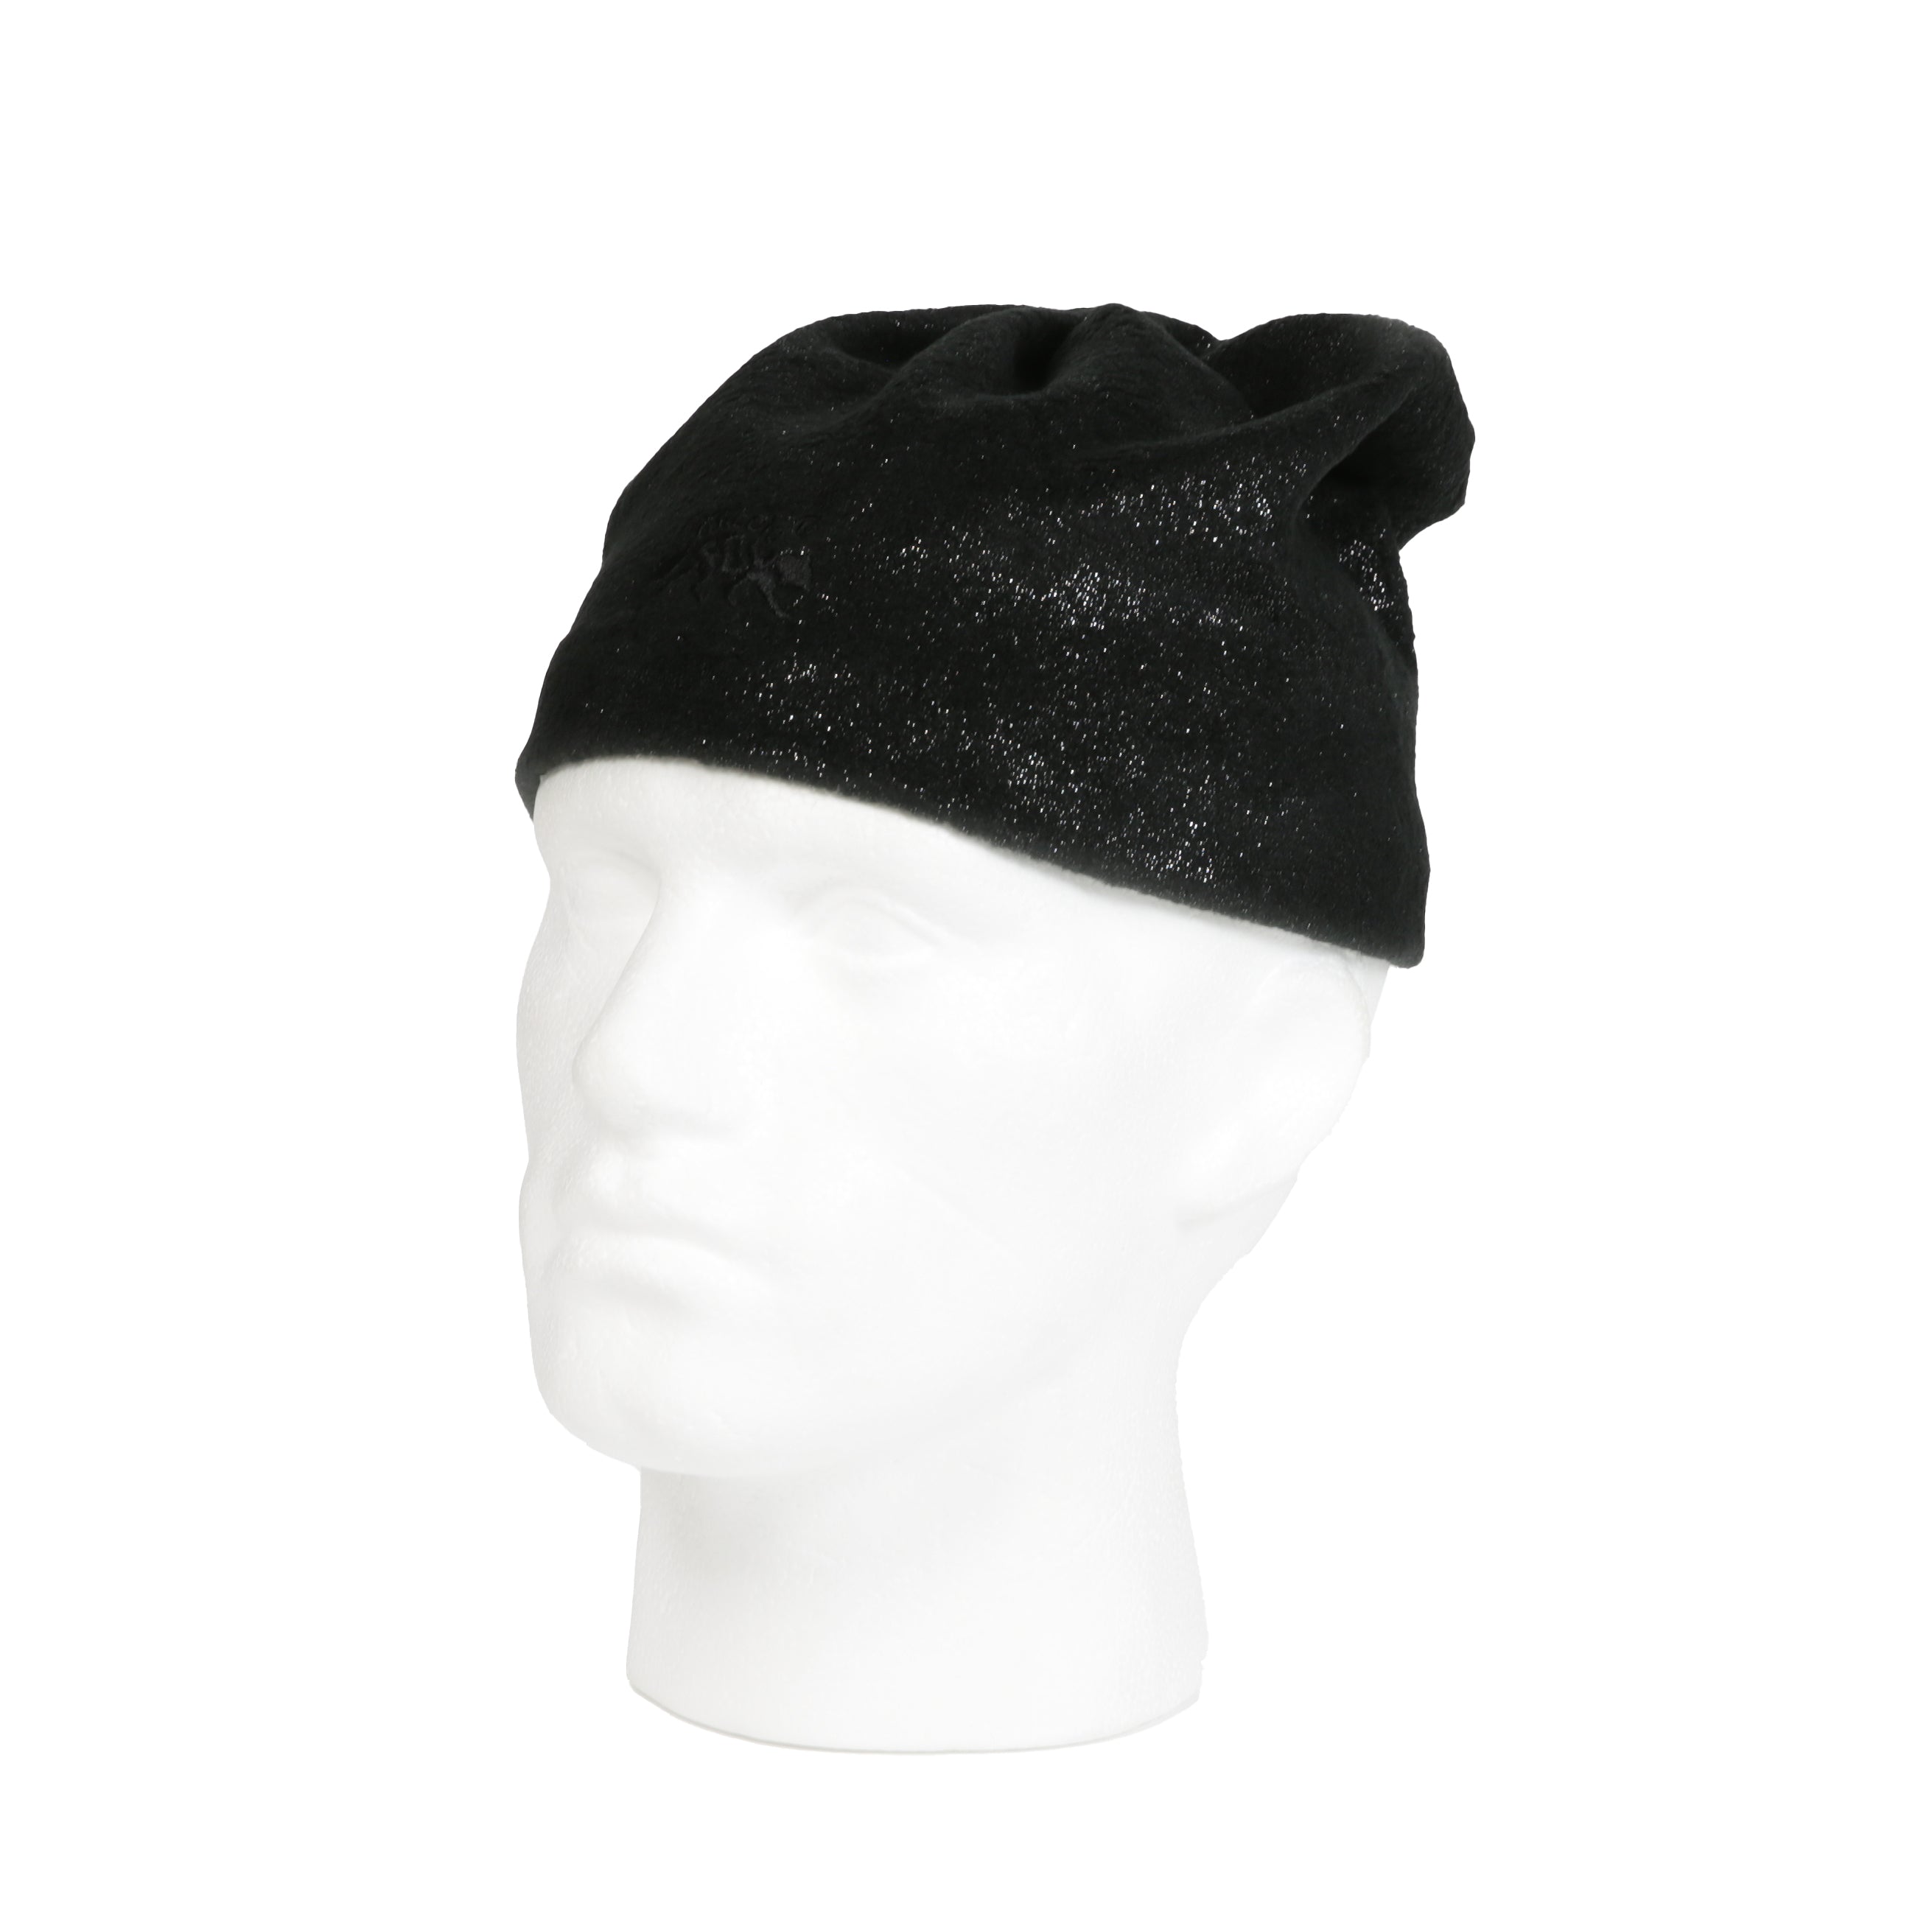 Arctic Fox Fleece Beanie Hat with Bobbles - Sparkly Black